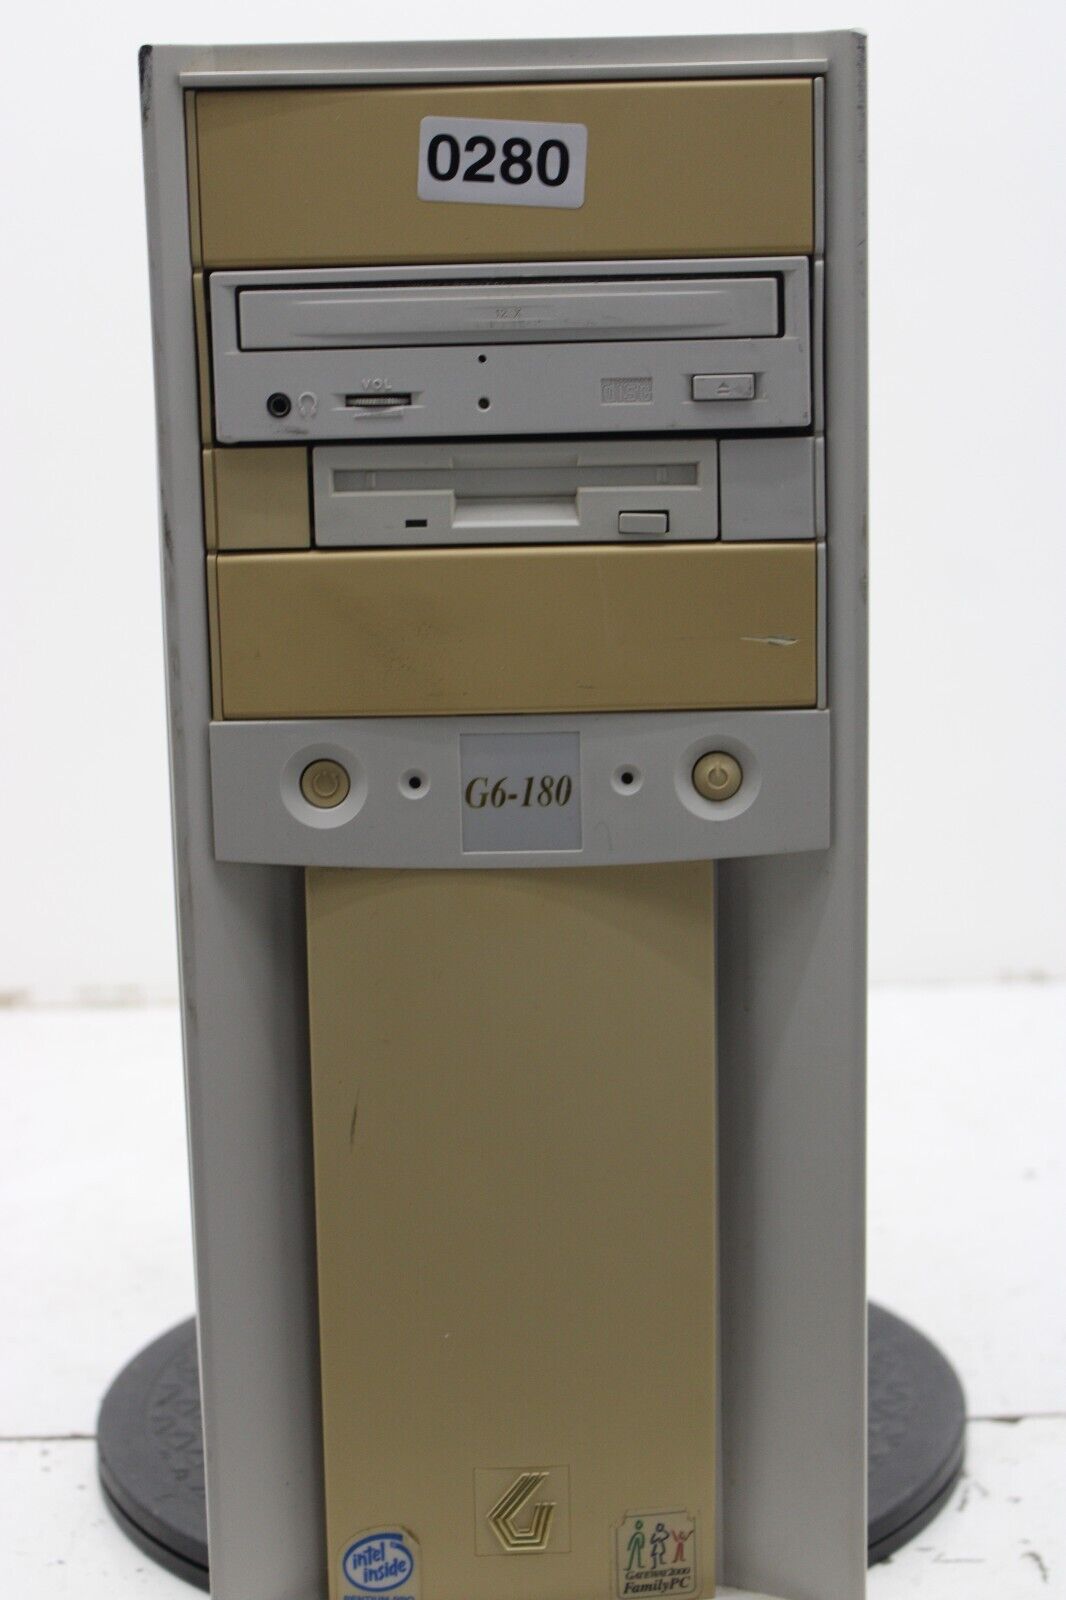 Gateway 2000 G6-180 ATX Tower Desktop Intel Pentium Pro 180 MHz 64 MB - NO HDD